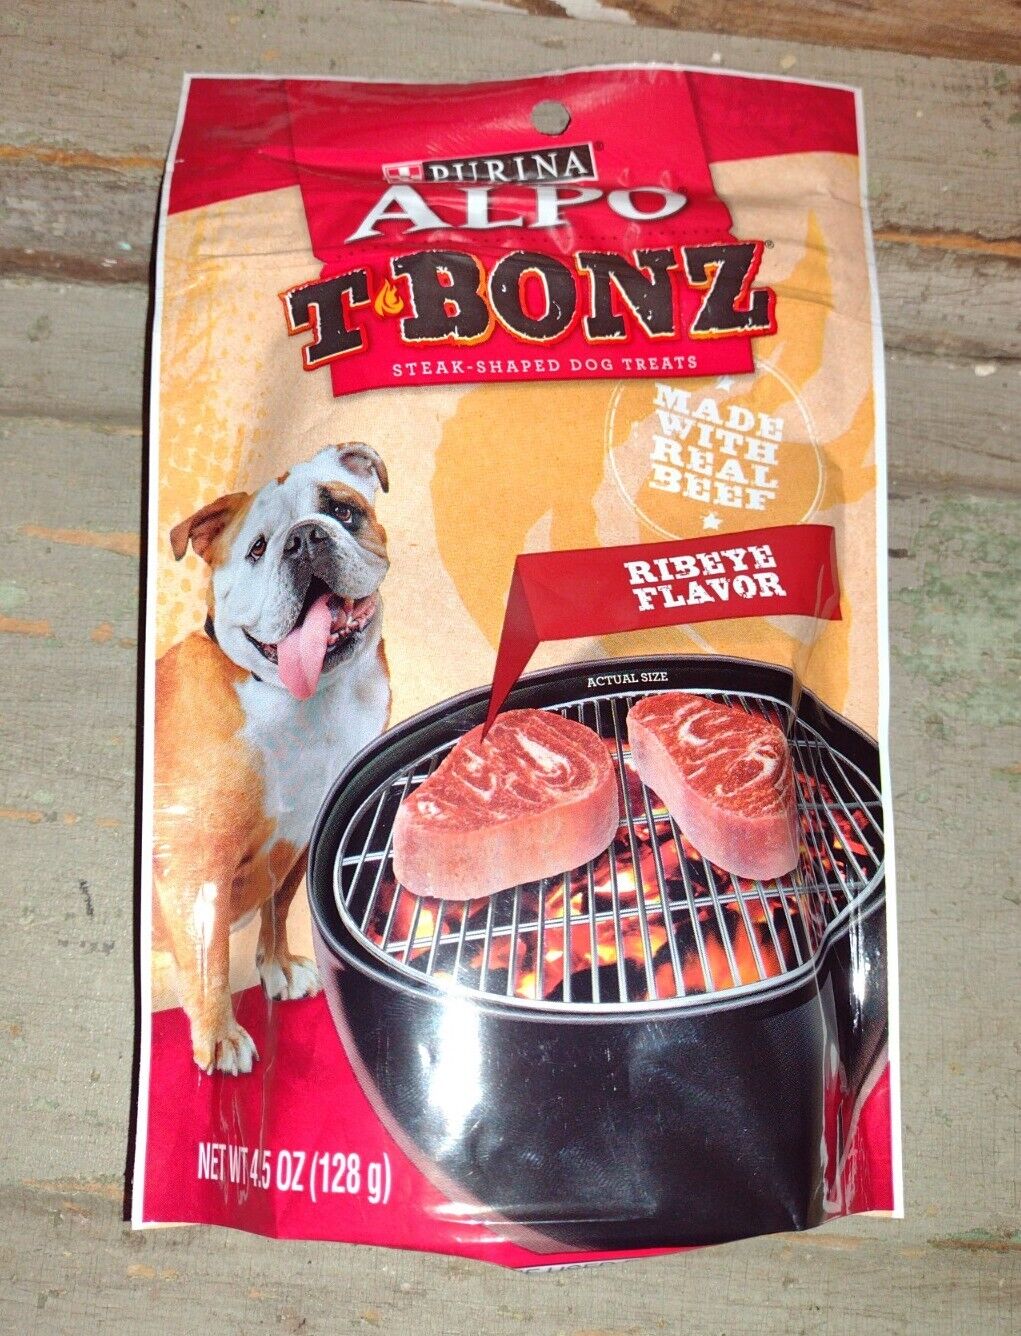 Purina Alpo T-Bonz Dog Treats Ribeye Flavor 4.5oz Per Bag. One Bag